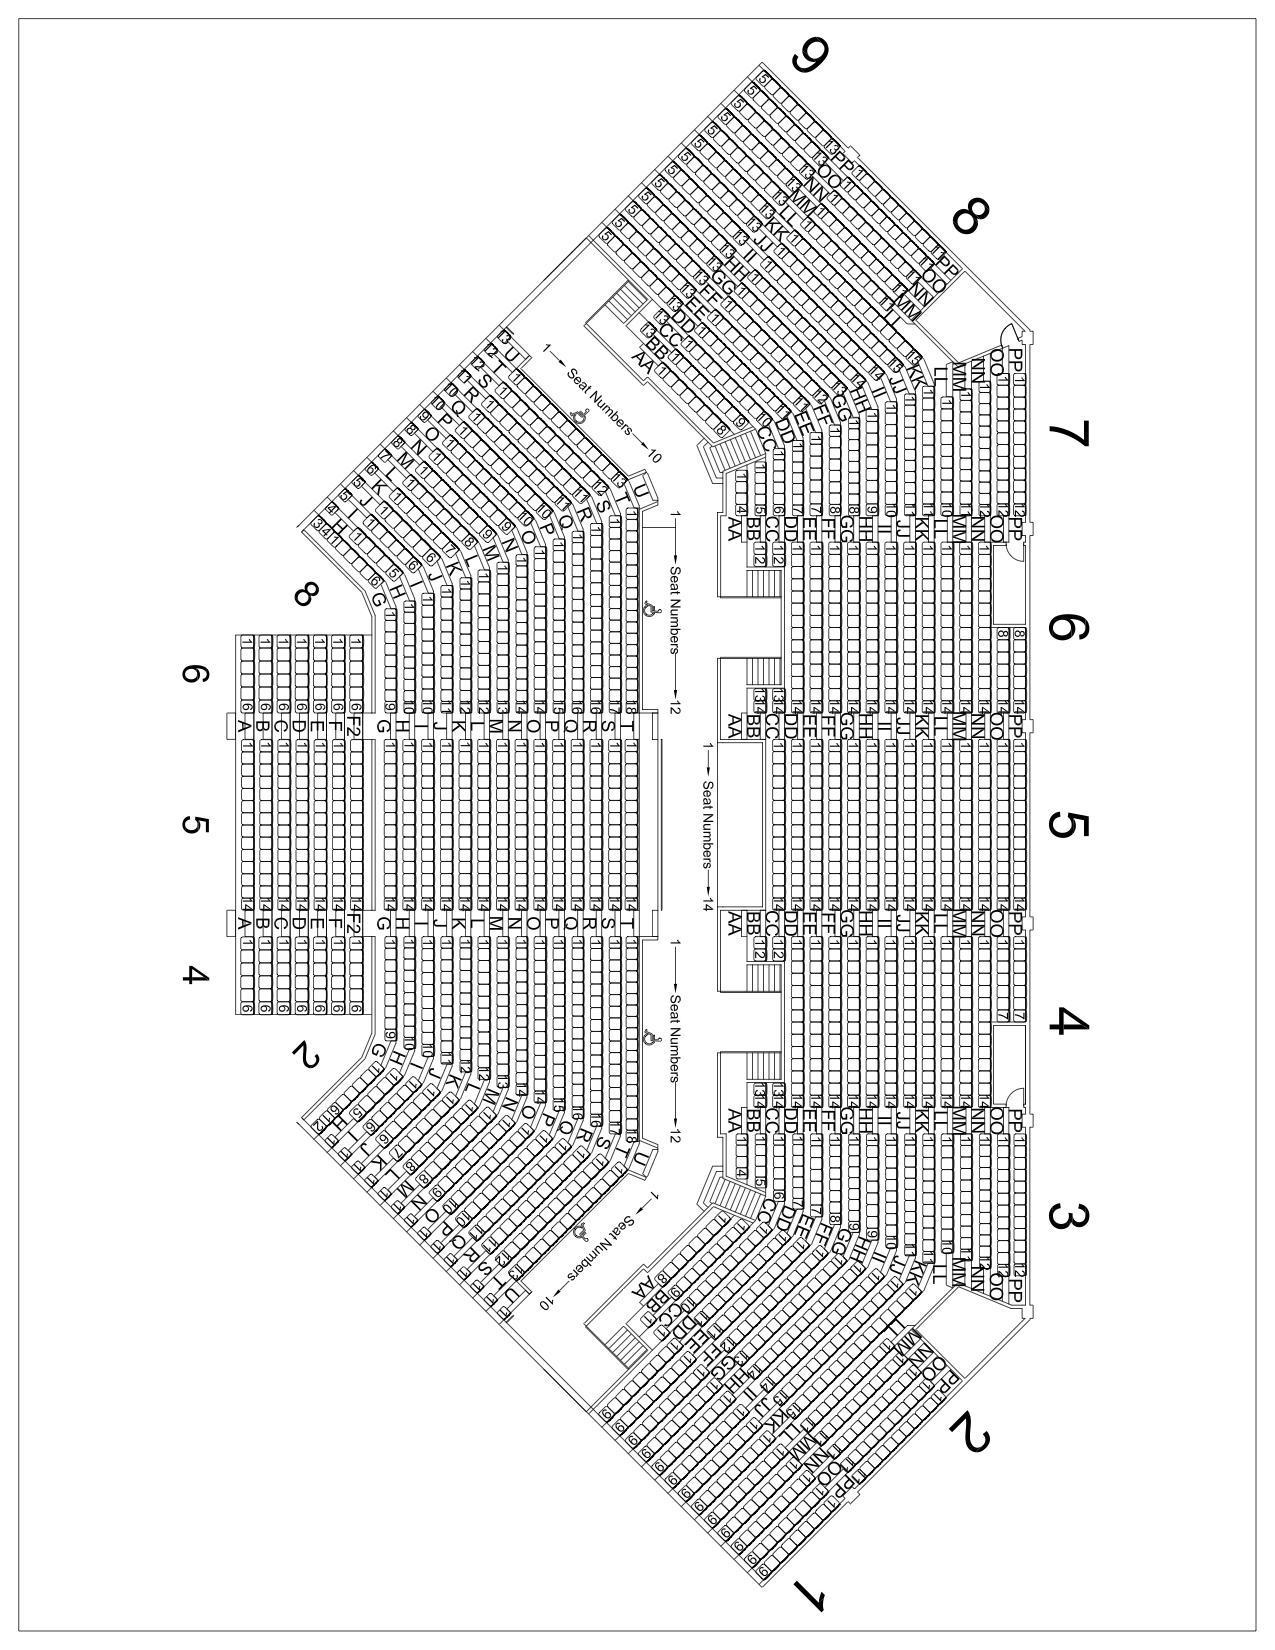 Wsu Beasley Coliseum Seating Chart